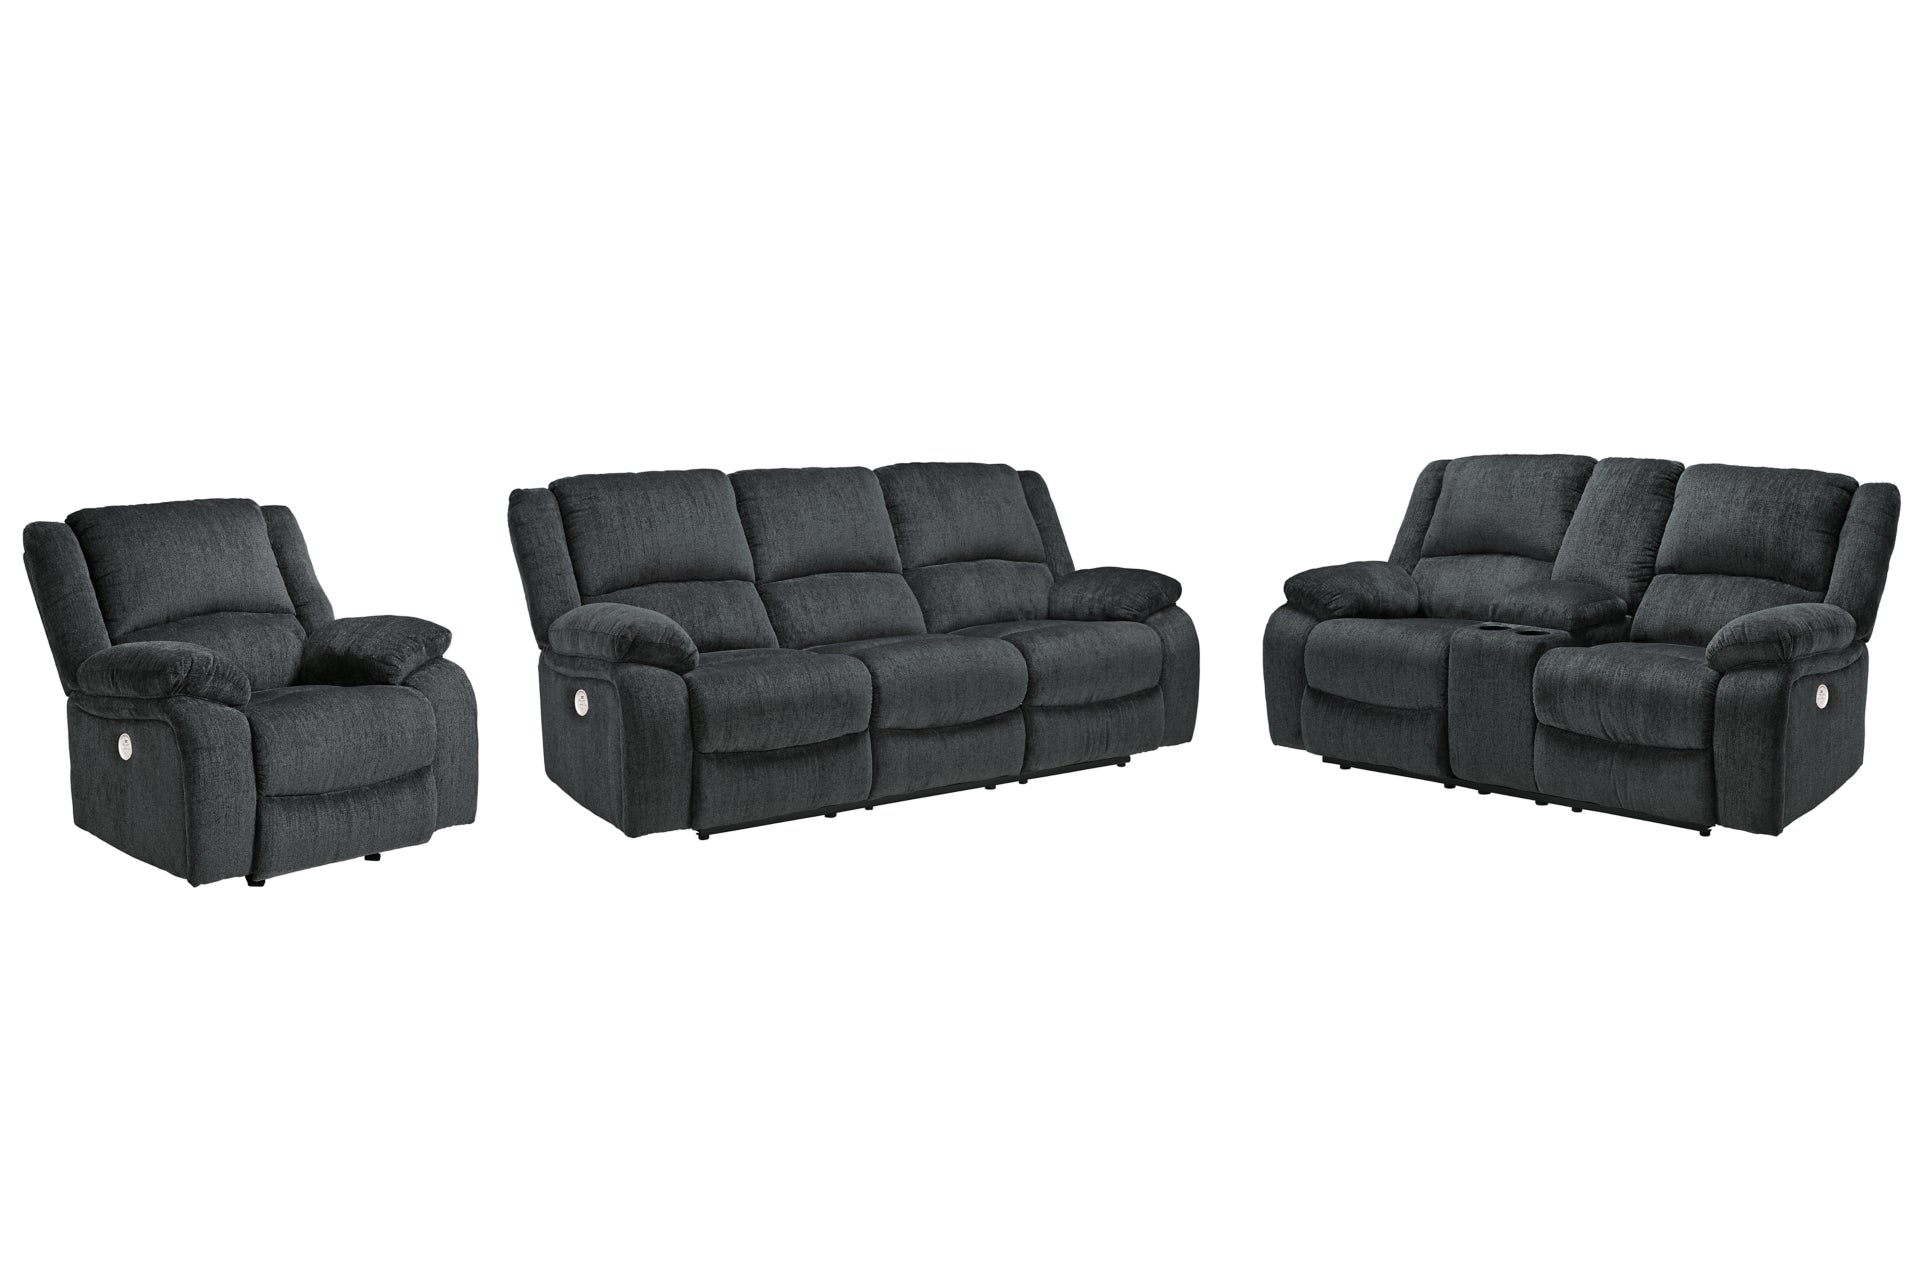 Calderwell Sofa, Loveseat and Recliner - PKG007322 - furniture place usa